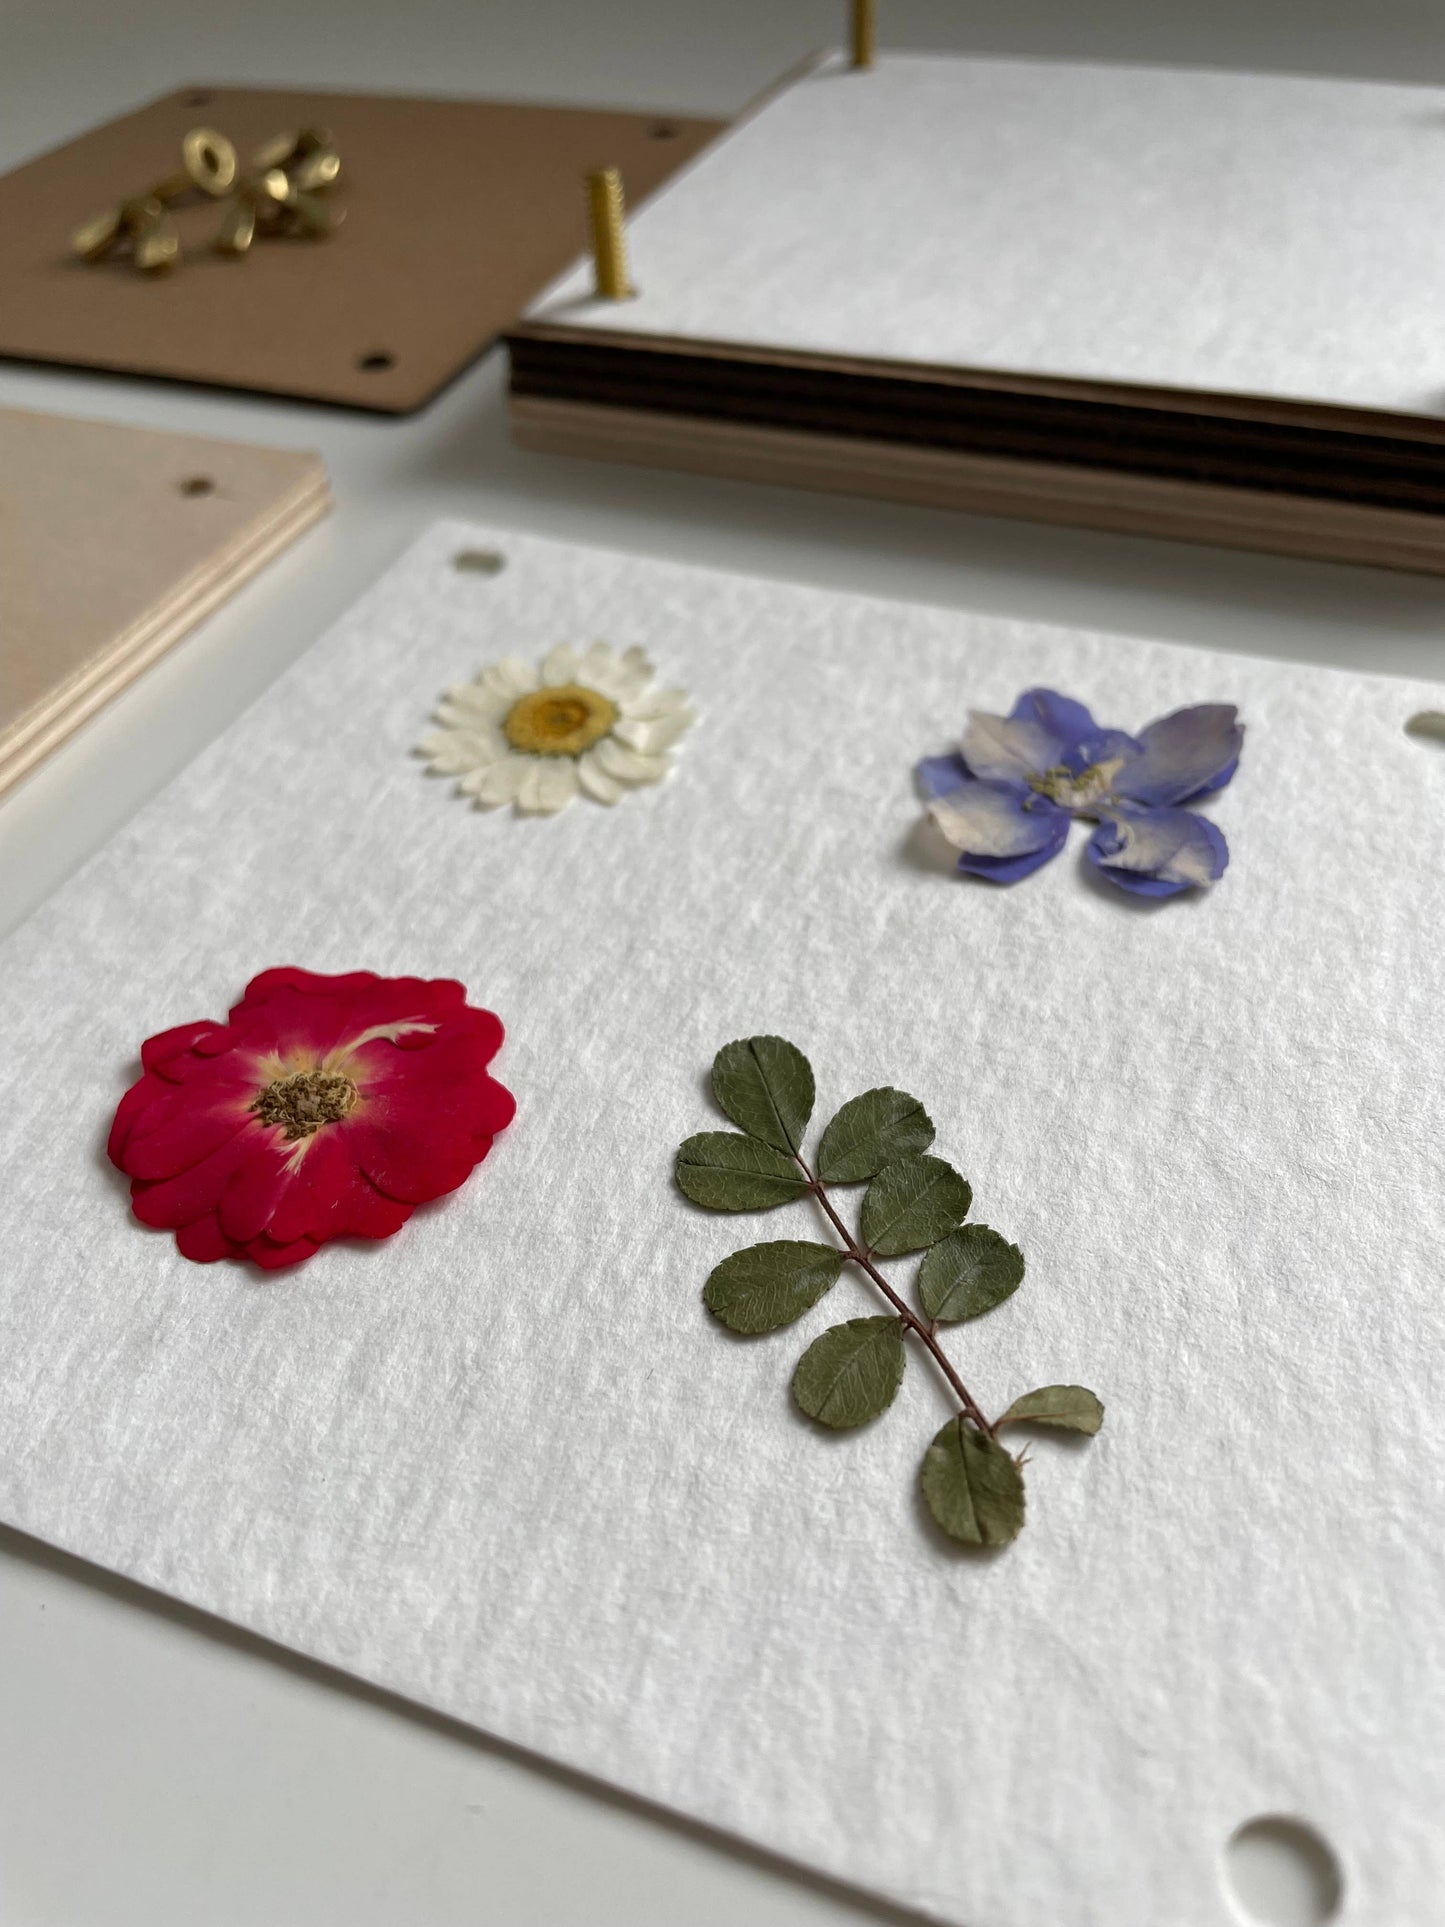 Flower Press Kit - Pressed Floral Accessories